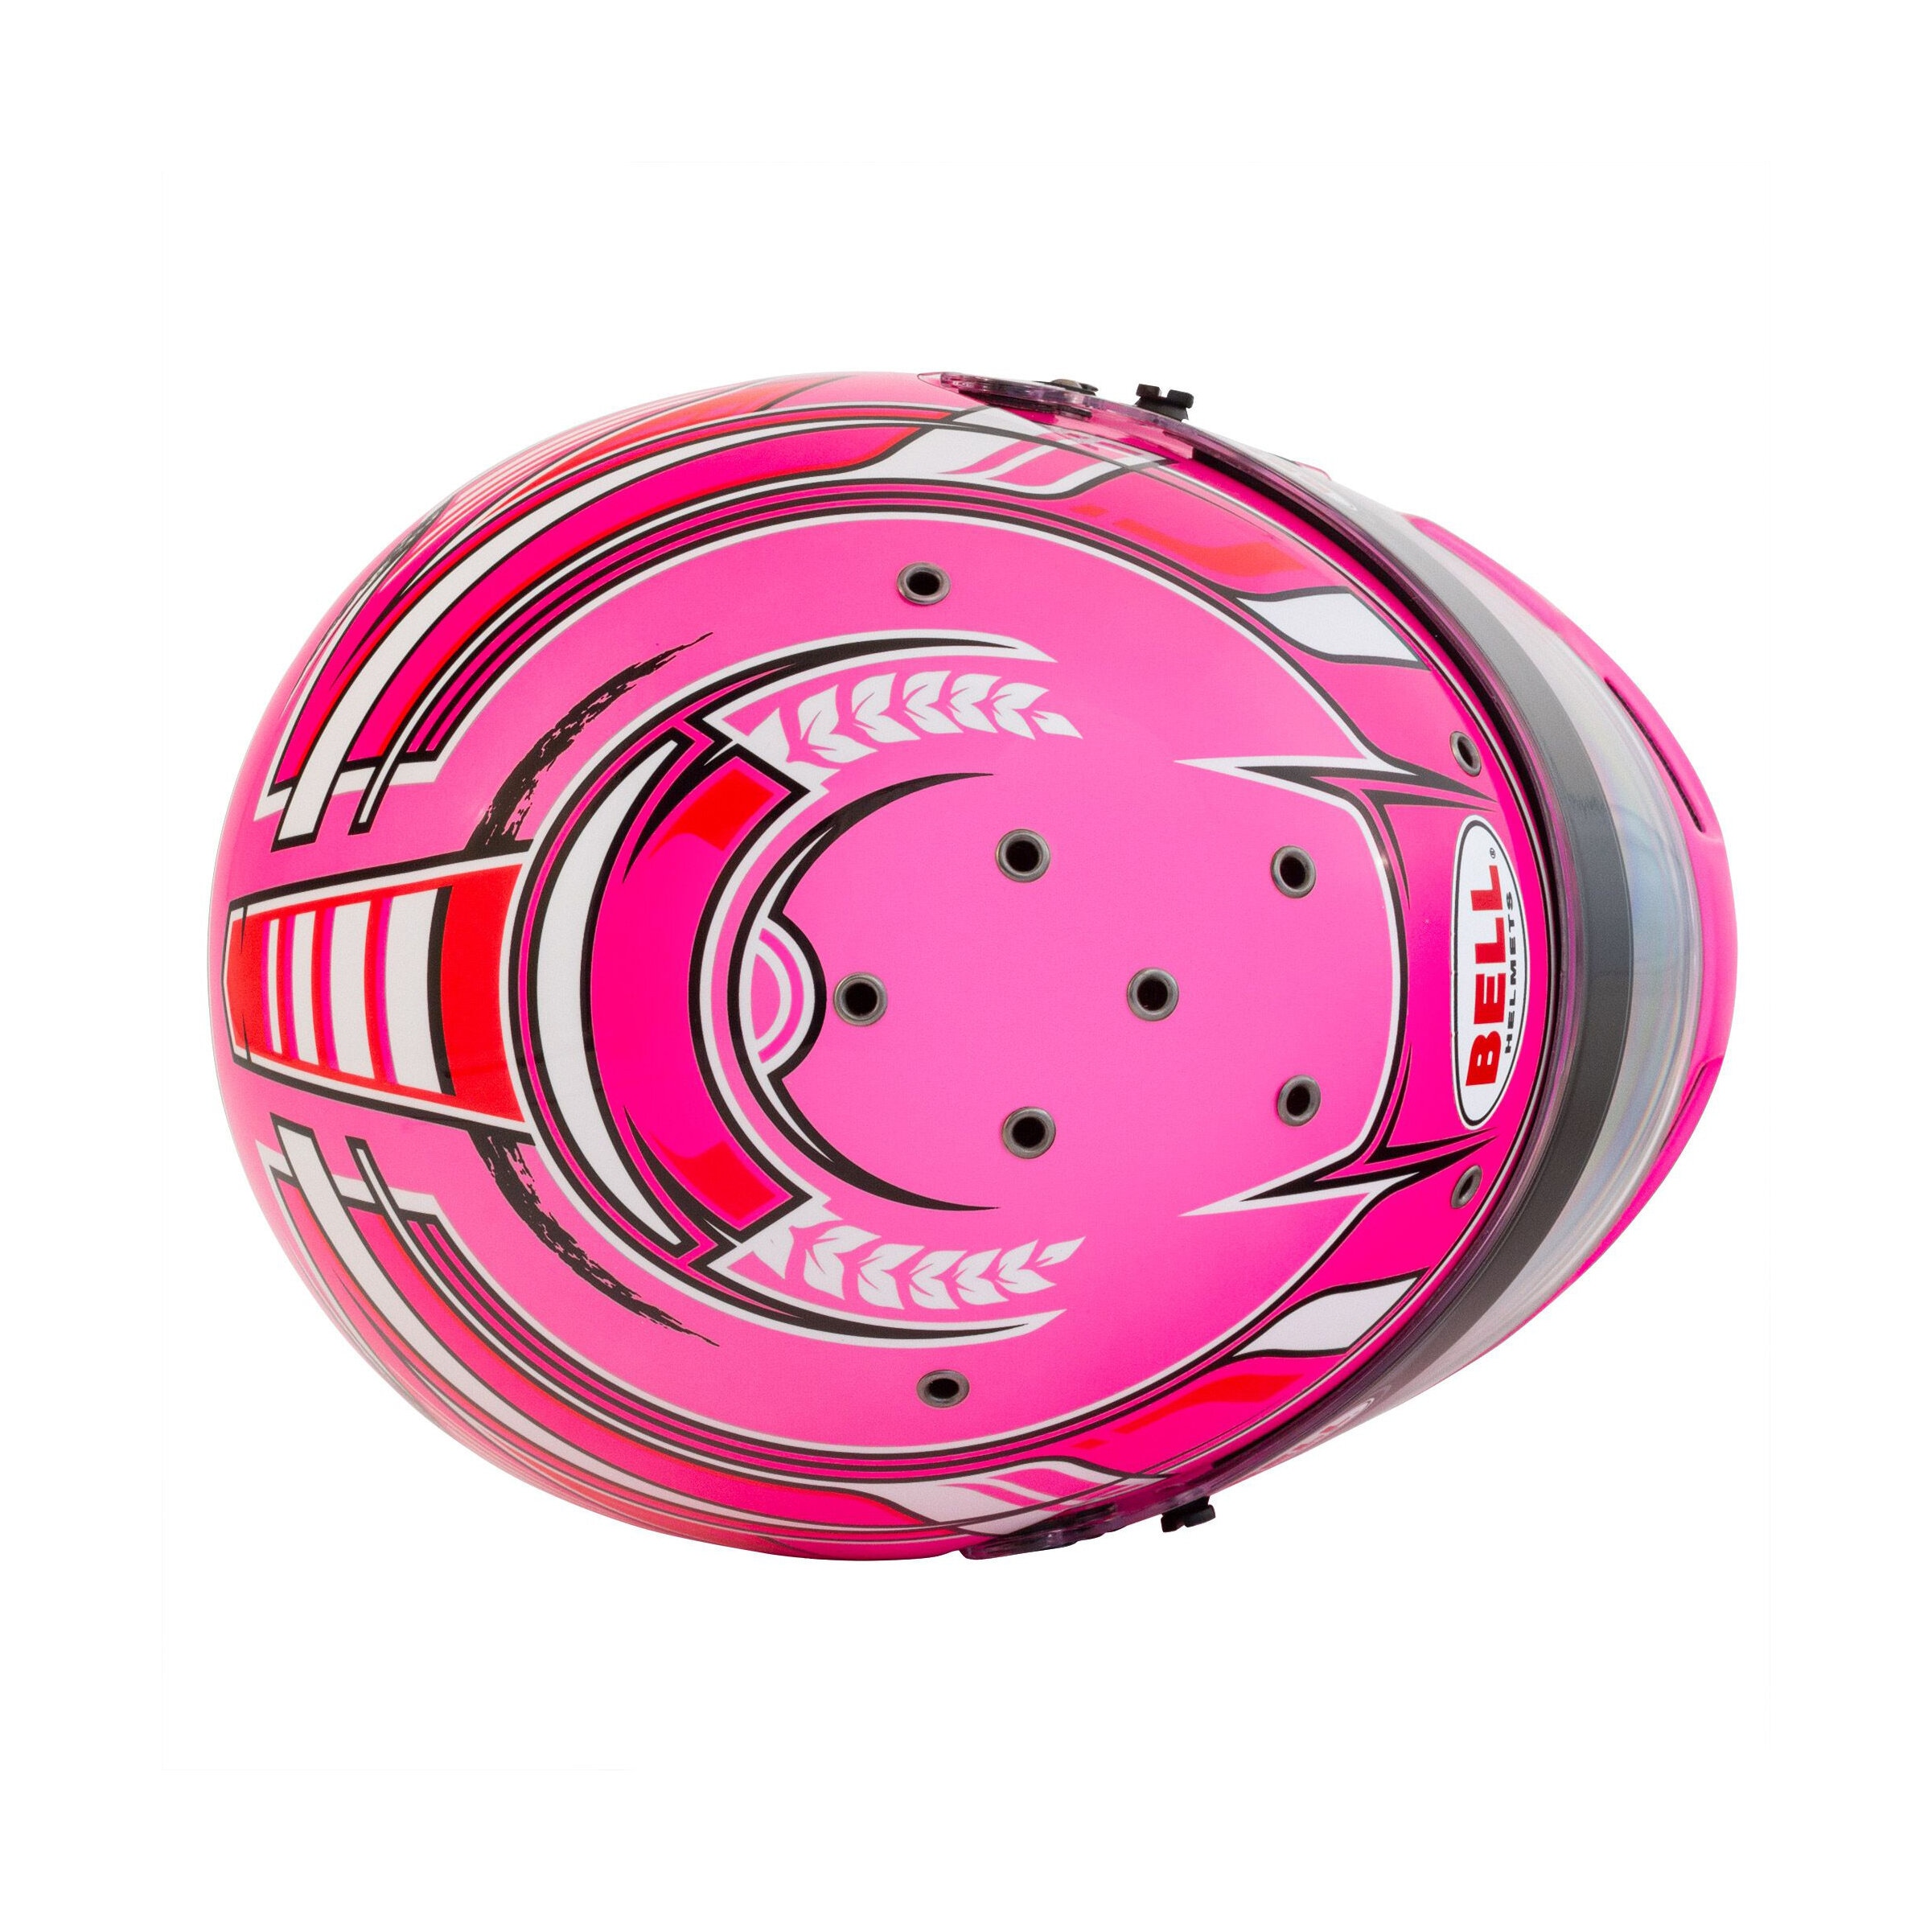 Helmet Bell KC7 CMR Champion Pink